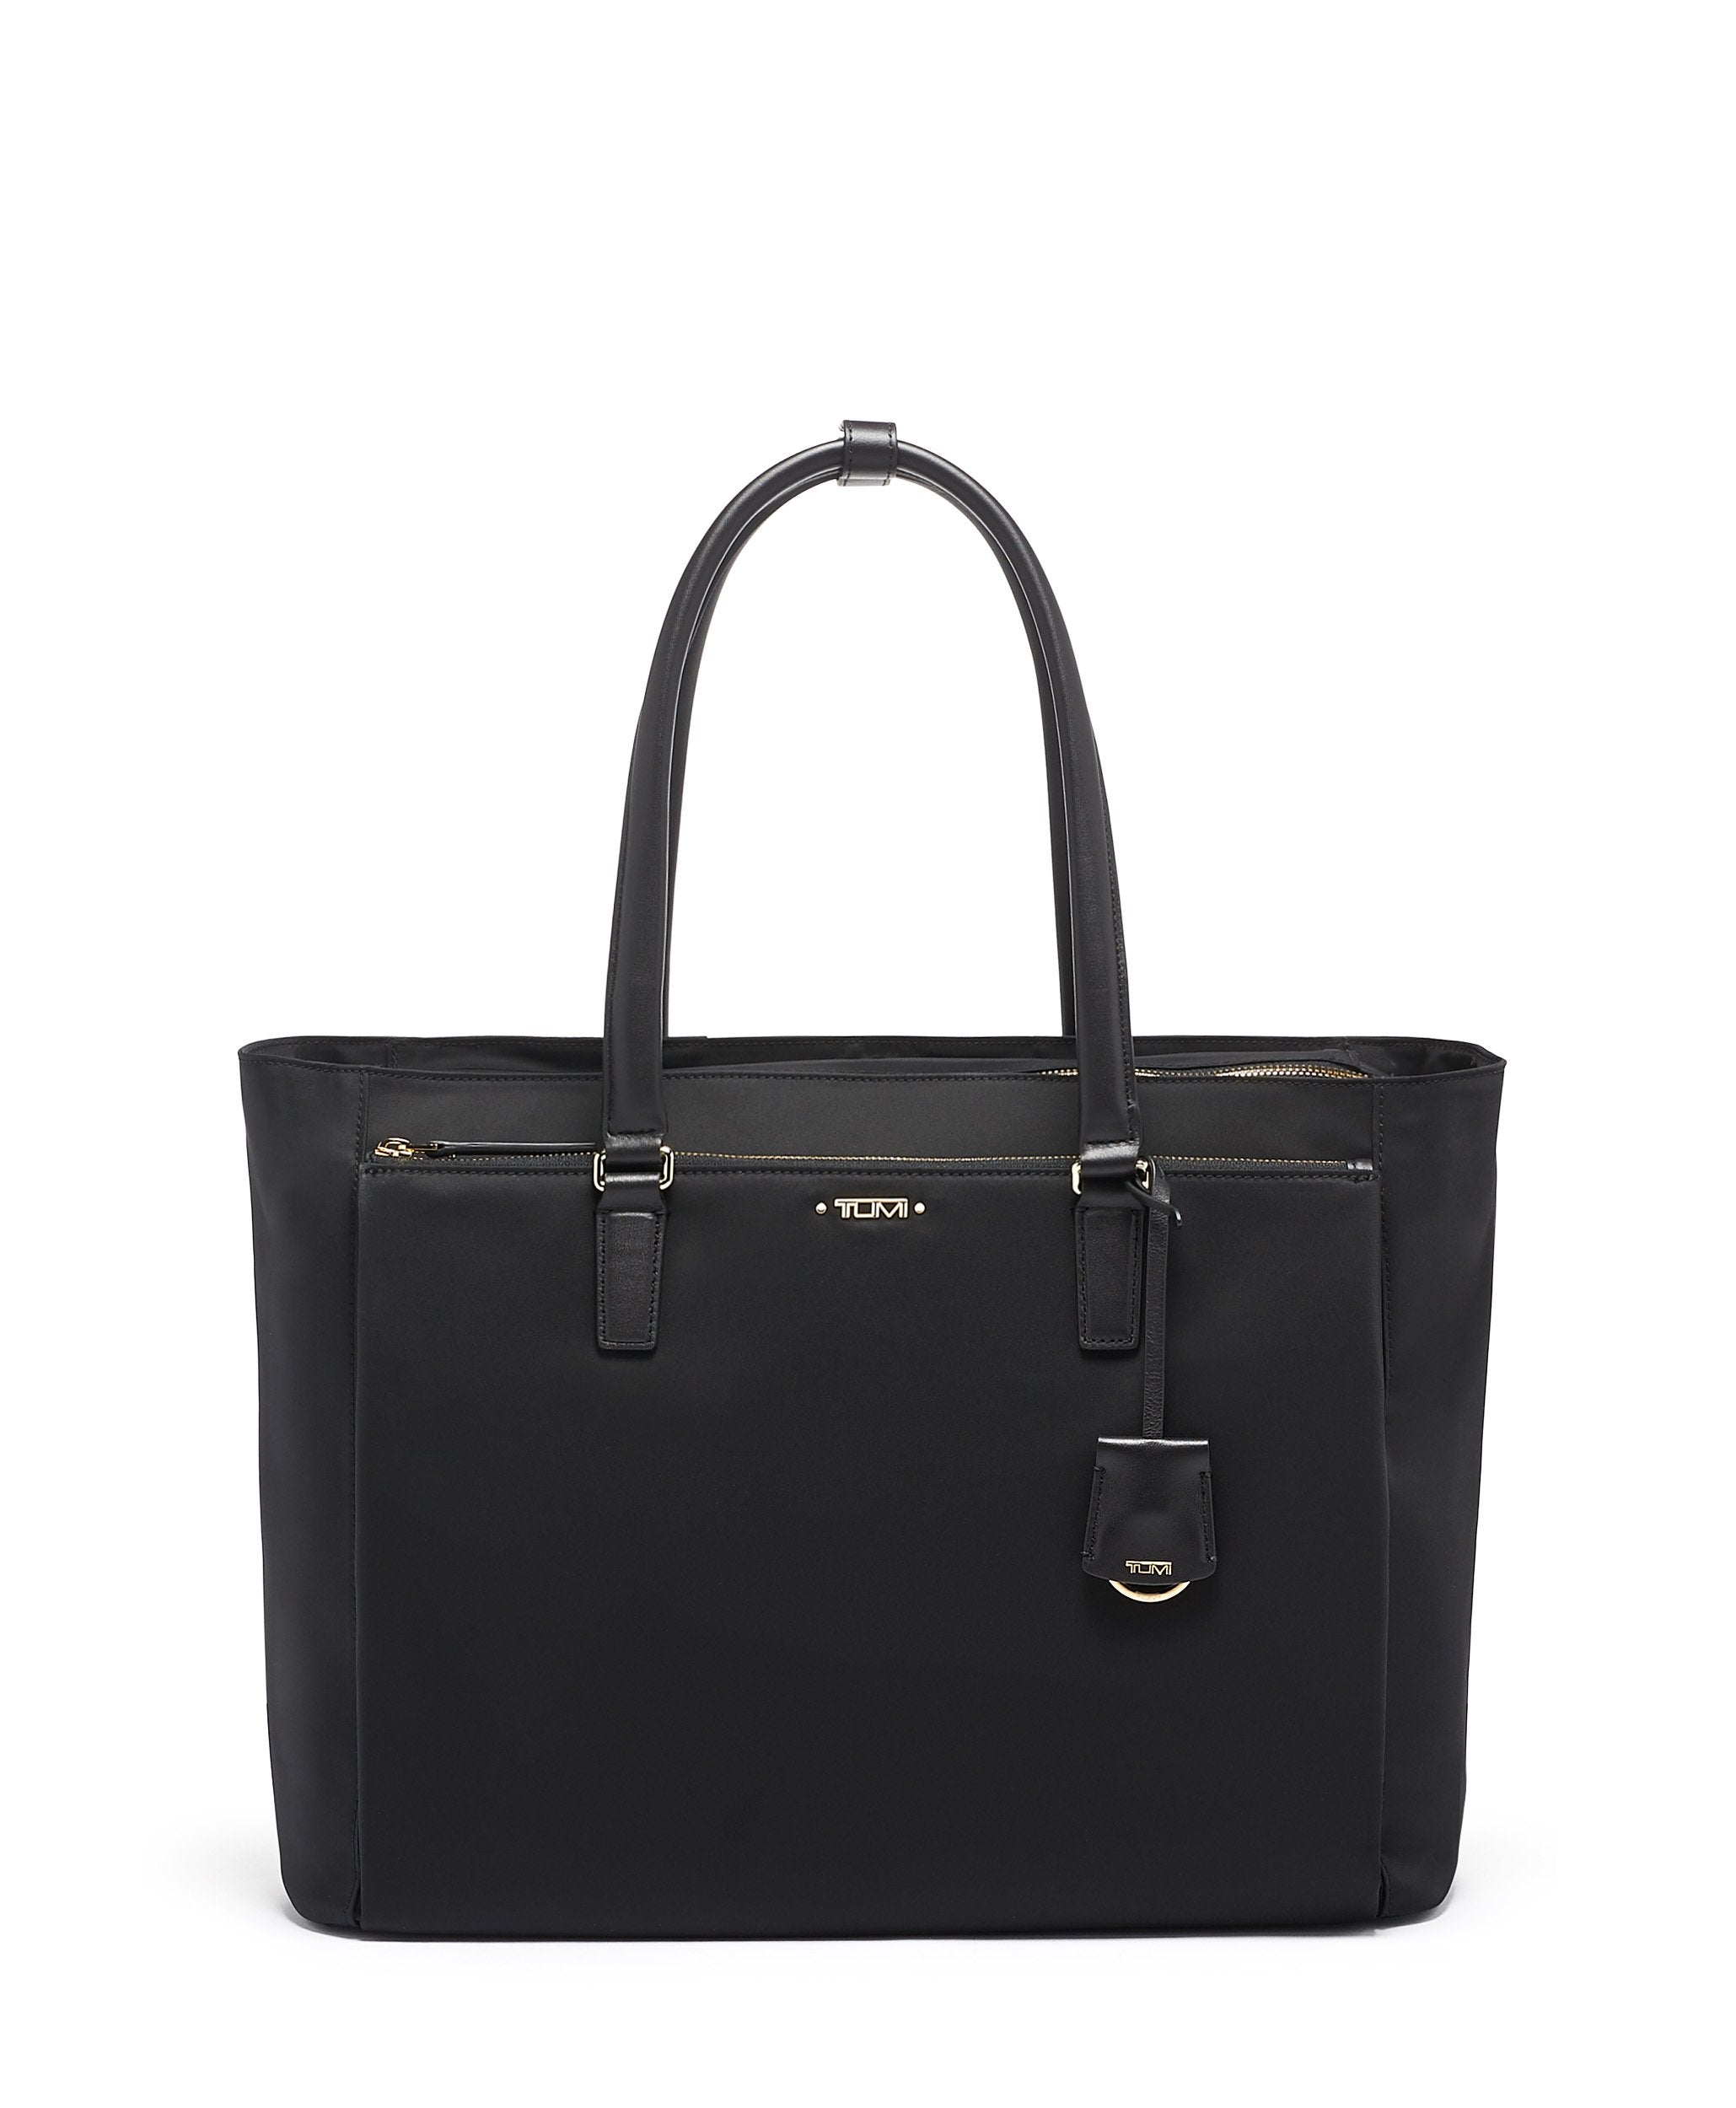 Tumi Pebble Leather Handbags | Mercari